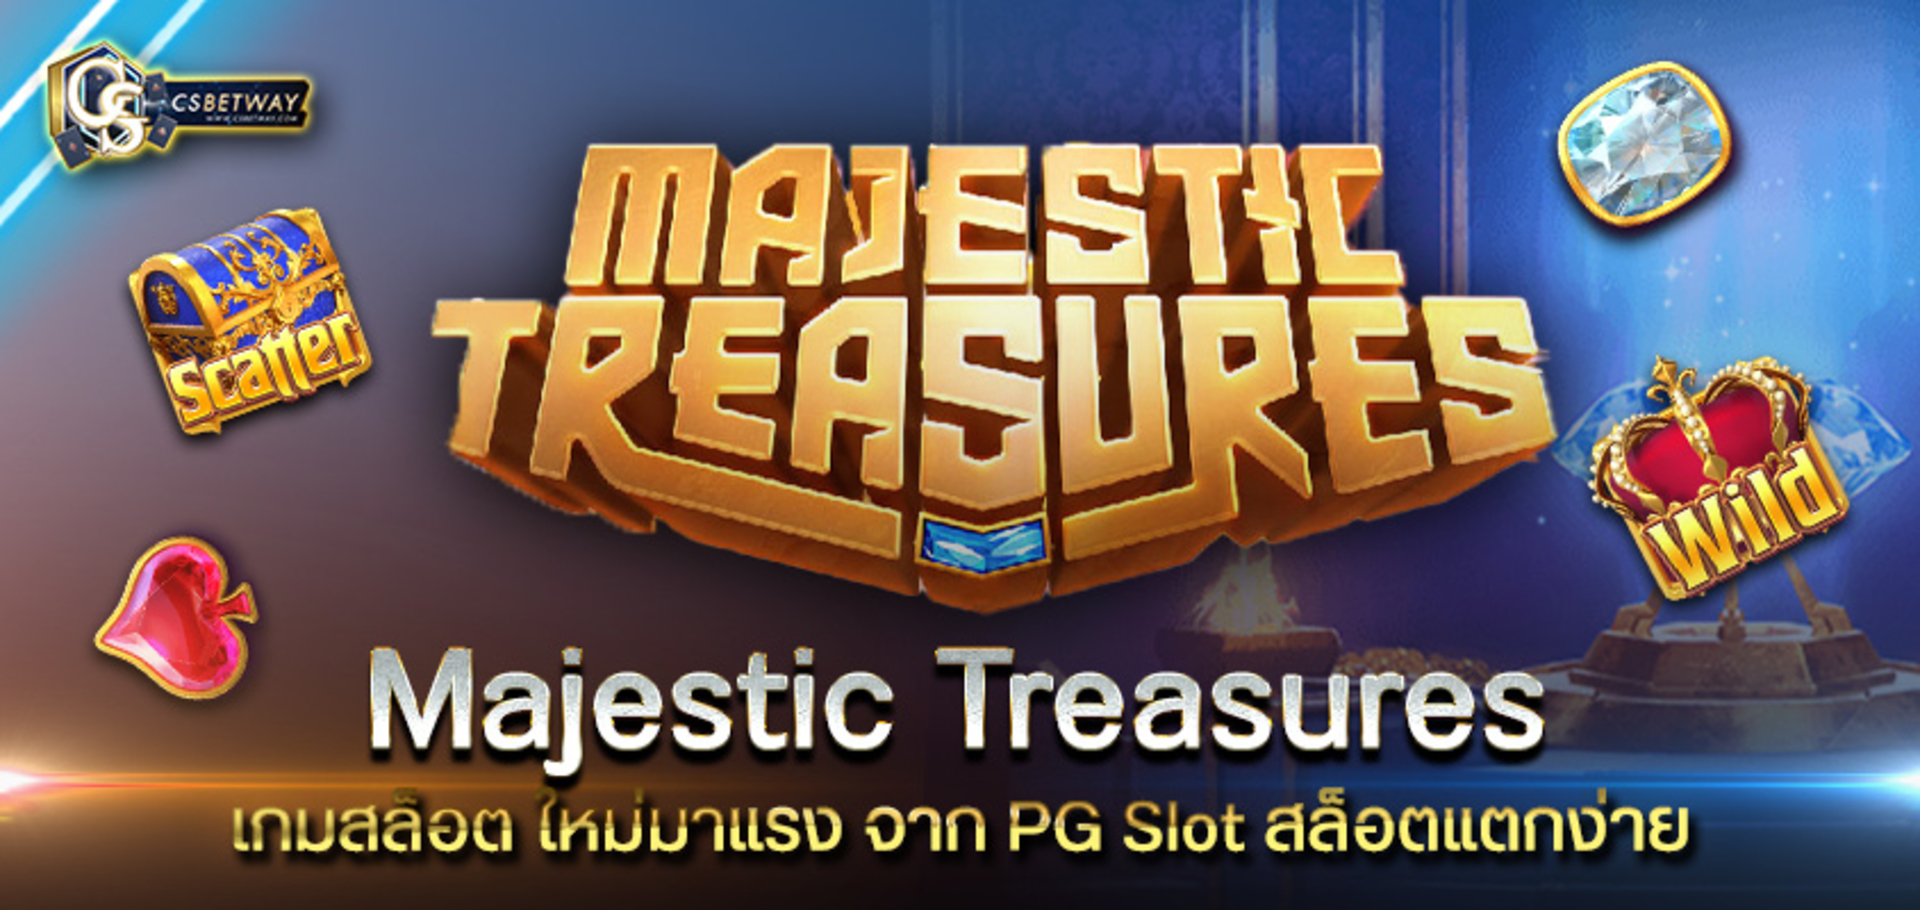 CSBetway Post Majestic Treasuresเกมสล็อตออนไลน์ Majestic Treasures PG เกมสล็อต ใหม่มาแรง จาก PG Slot สล็อตแตกง่าย ได้ไว ให้คุณลองเล่นได้แล้ววันนี้ สล็อตพีจี PGสล็อต